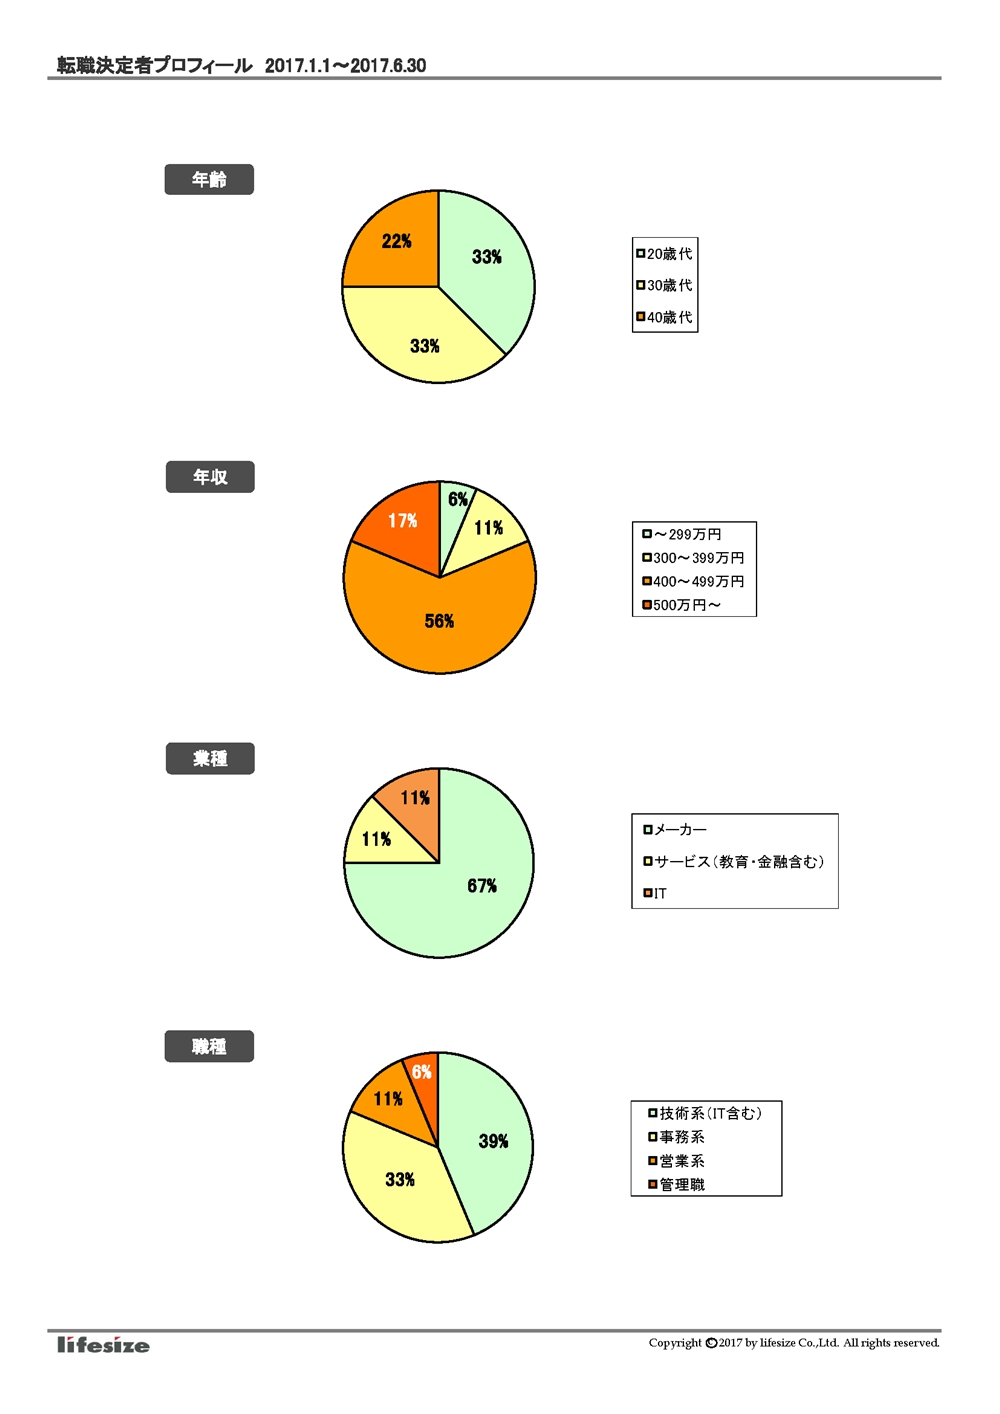 http://rs-hiroshima.net/%E8%BB%A2%E8%81%B7%E6%88%90%E5%8A%9F%E8%80%85%E3%83%97%E3%83%AD%E3%83%95%E3%82%A3%E3%83%BC%E3%83%AB%E3%83%87%E3%83%BC%E3%82%BF%EF%BC%882017%E5%B9%B4%E4%B8%8A%E5%8D%8A%E6%9C%9F%EF%BC%89.jpg